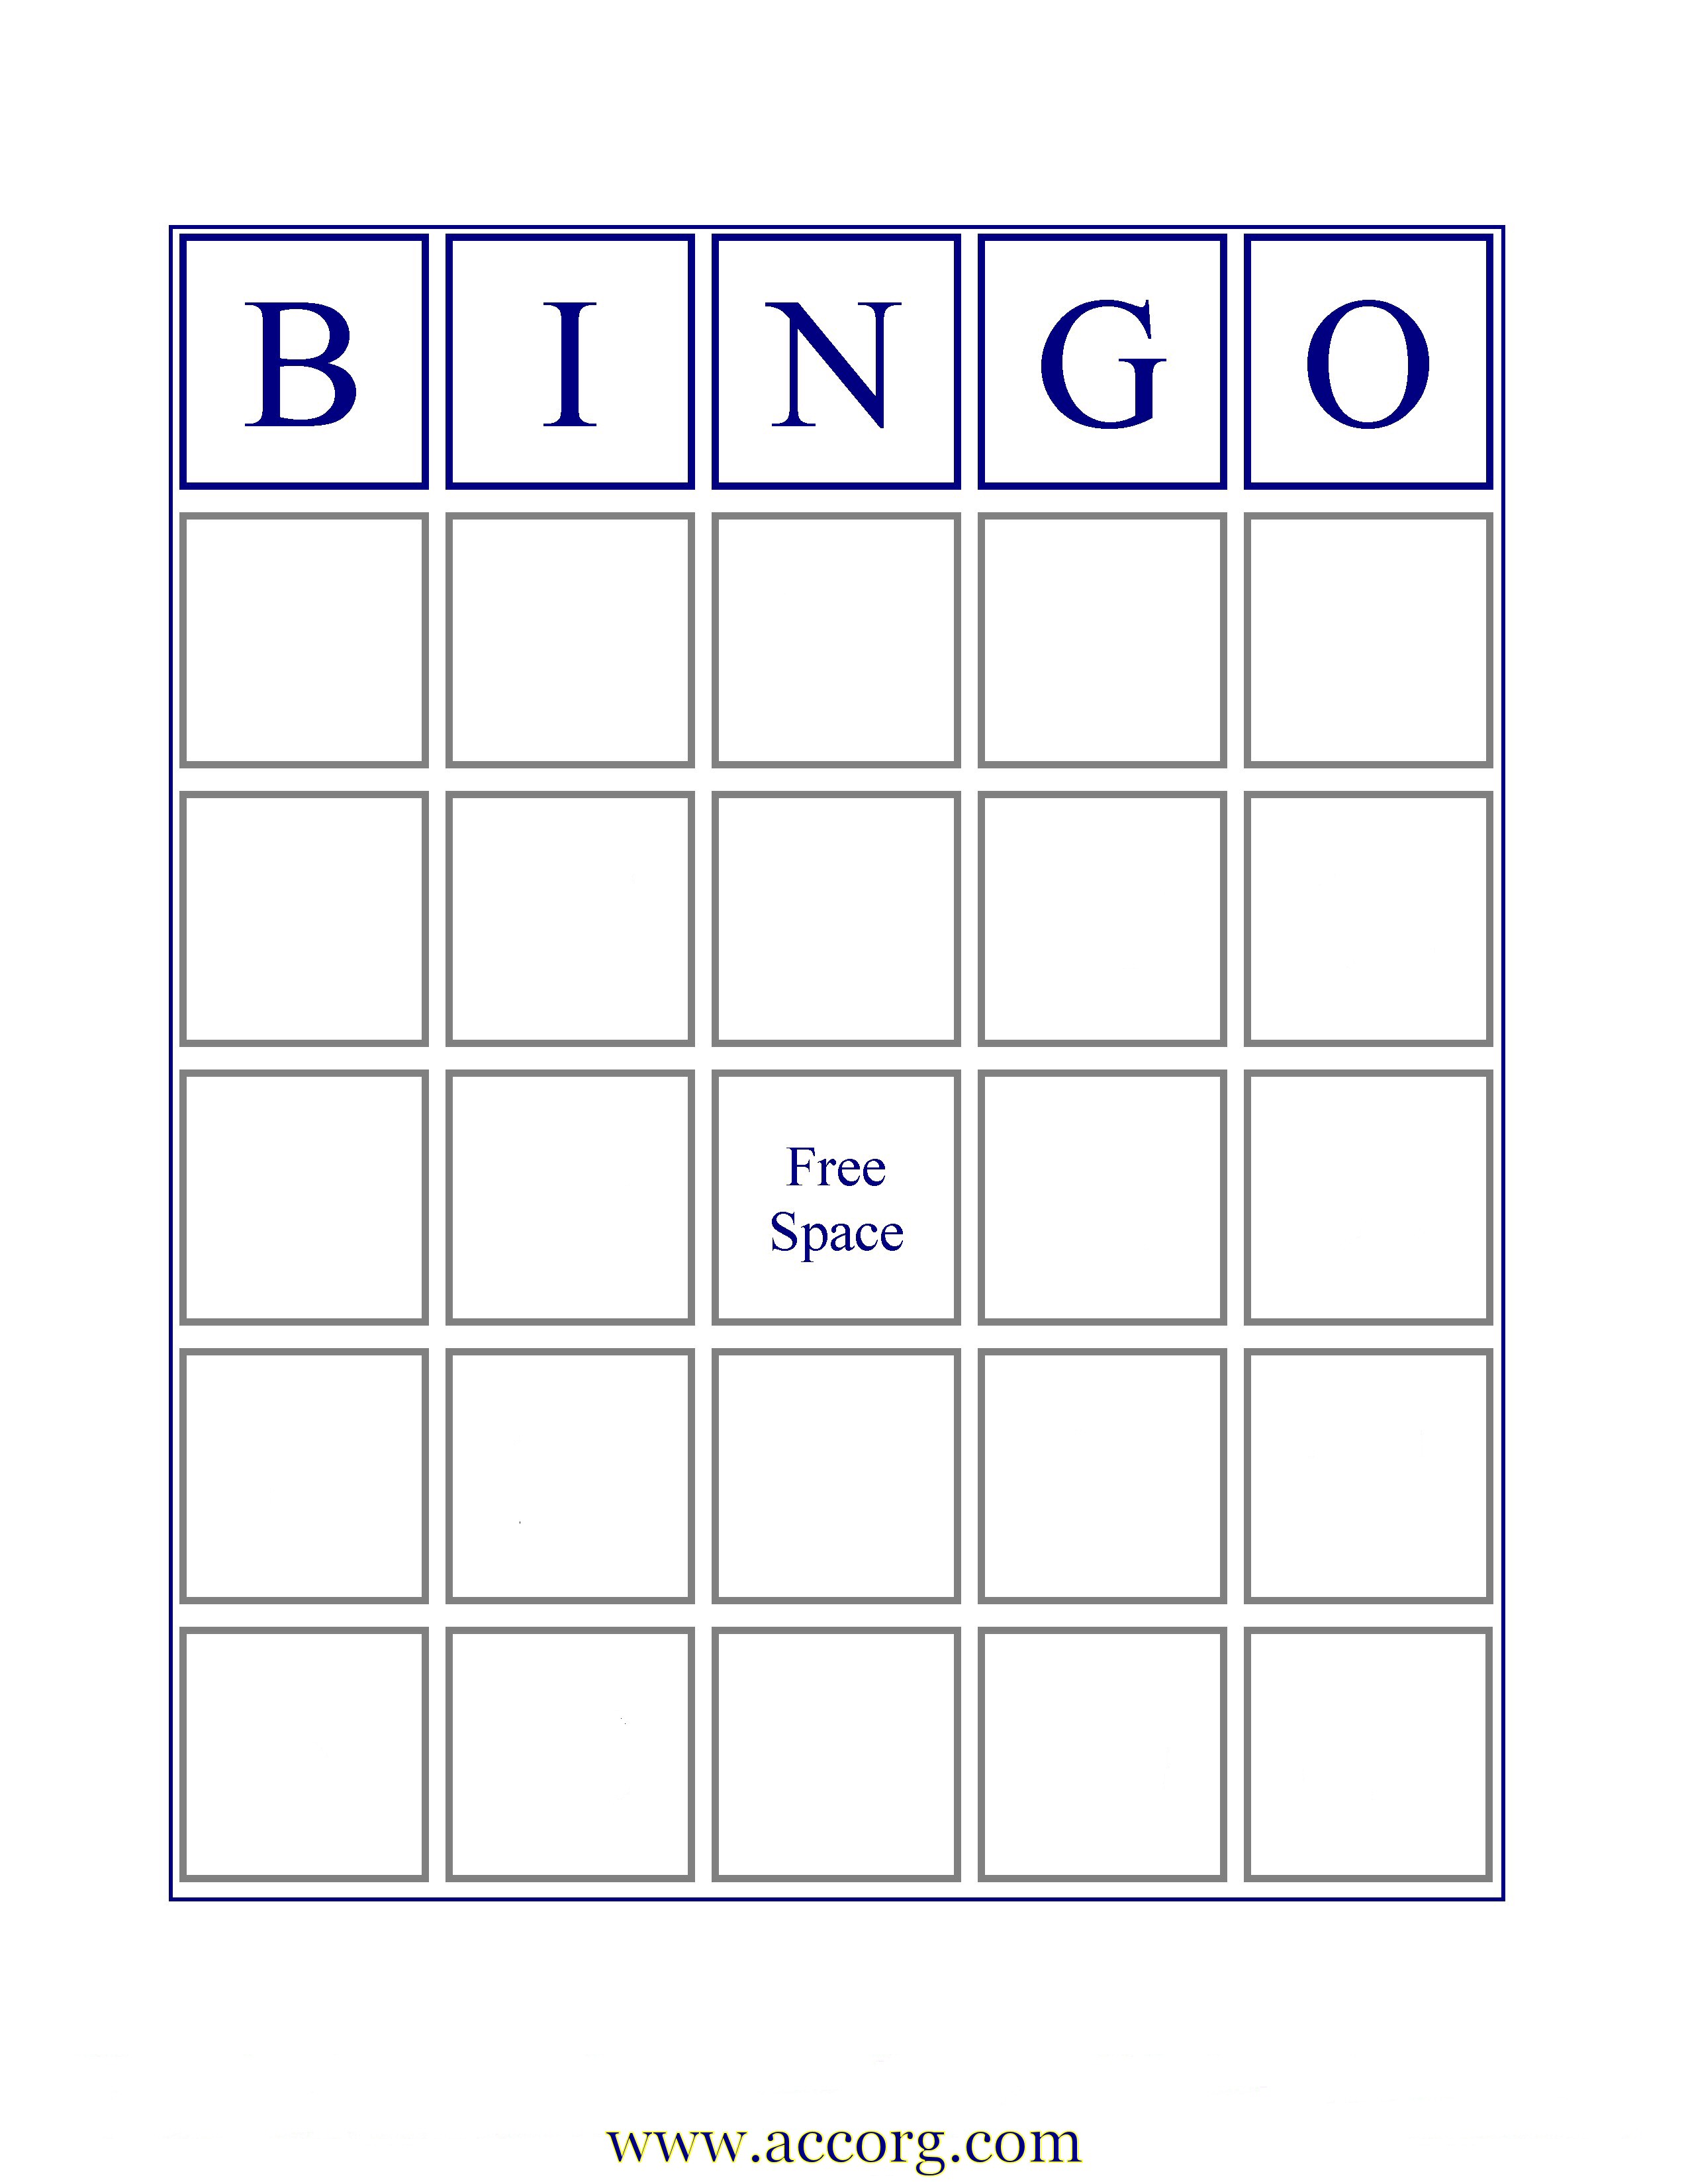 international-bingo-association-downloads